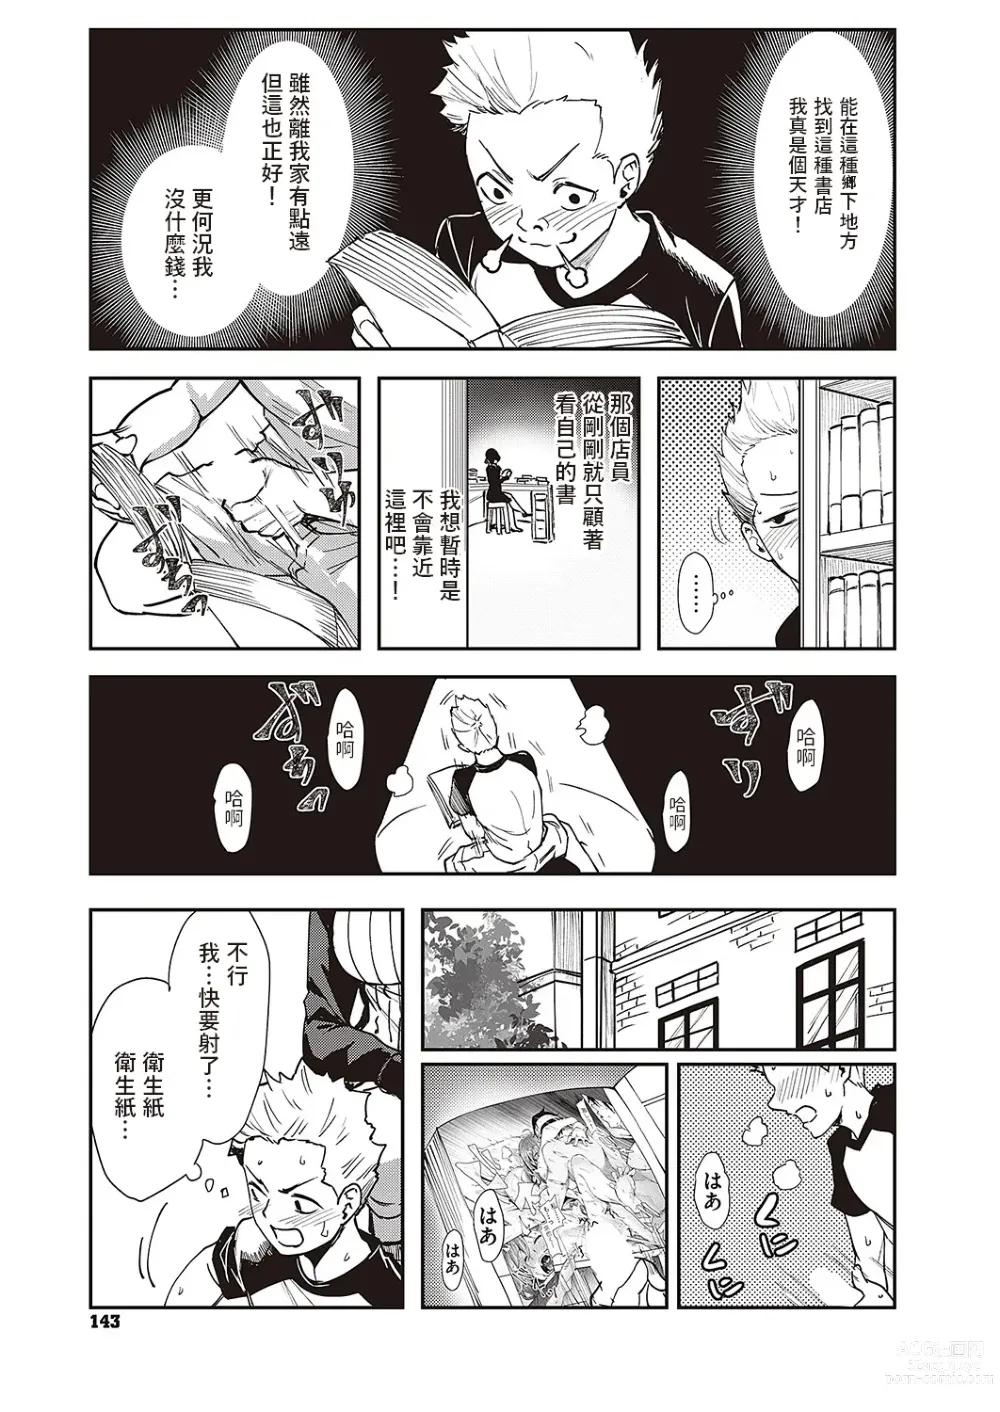 Page 3 of manga Honmono